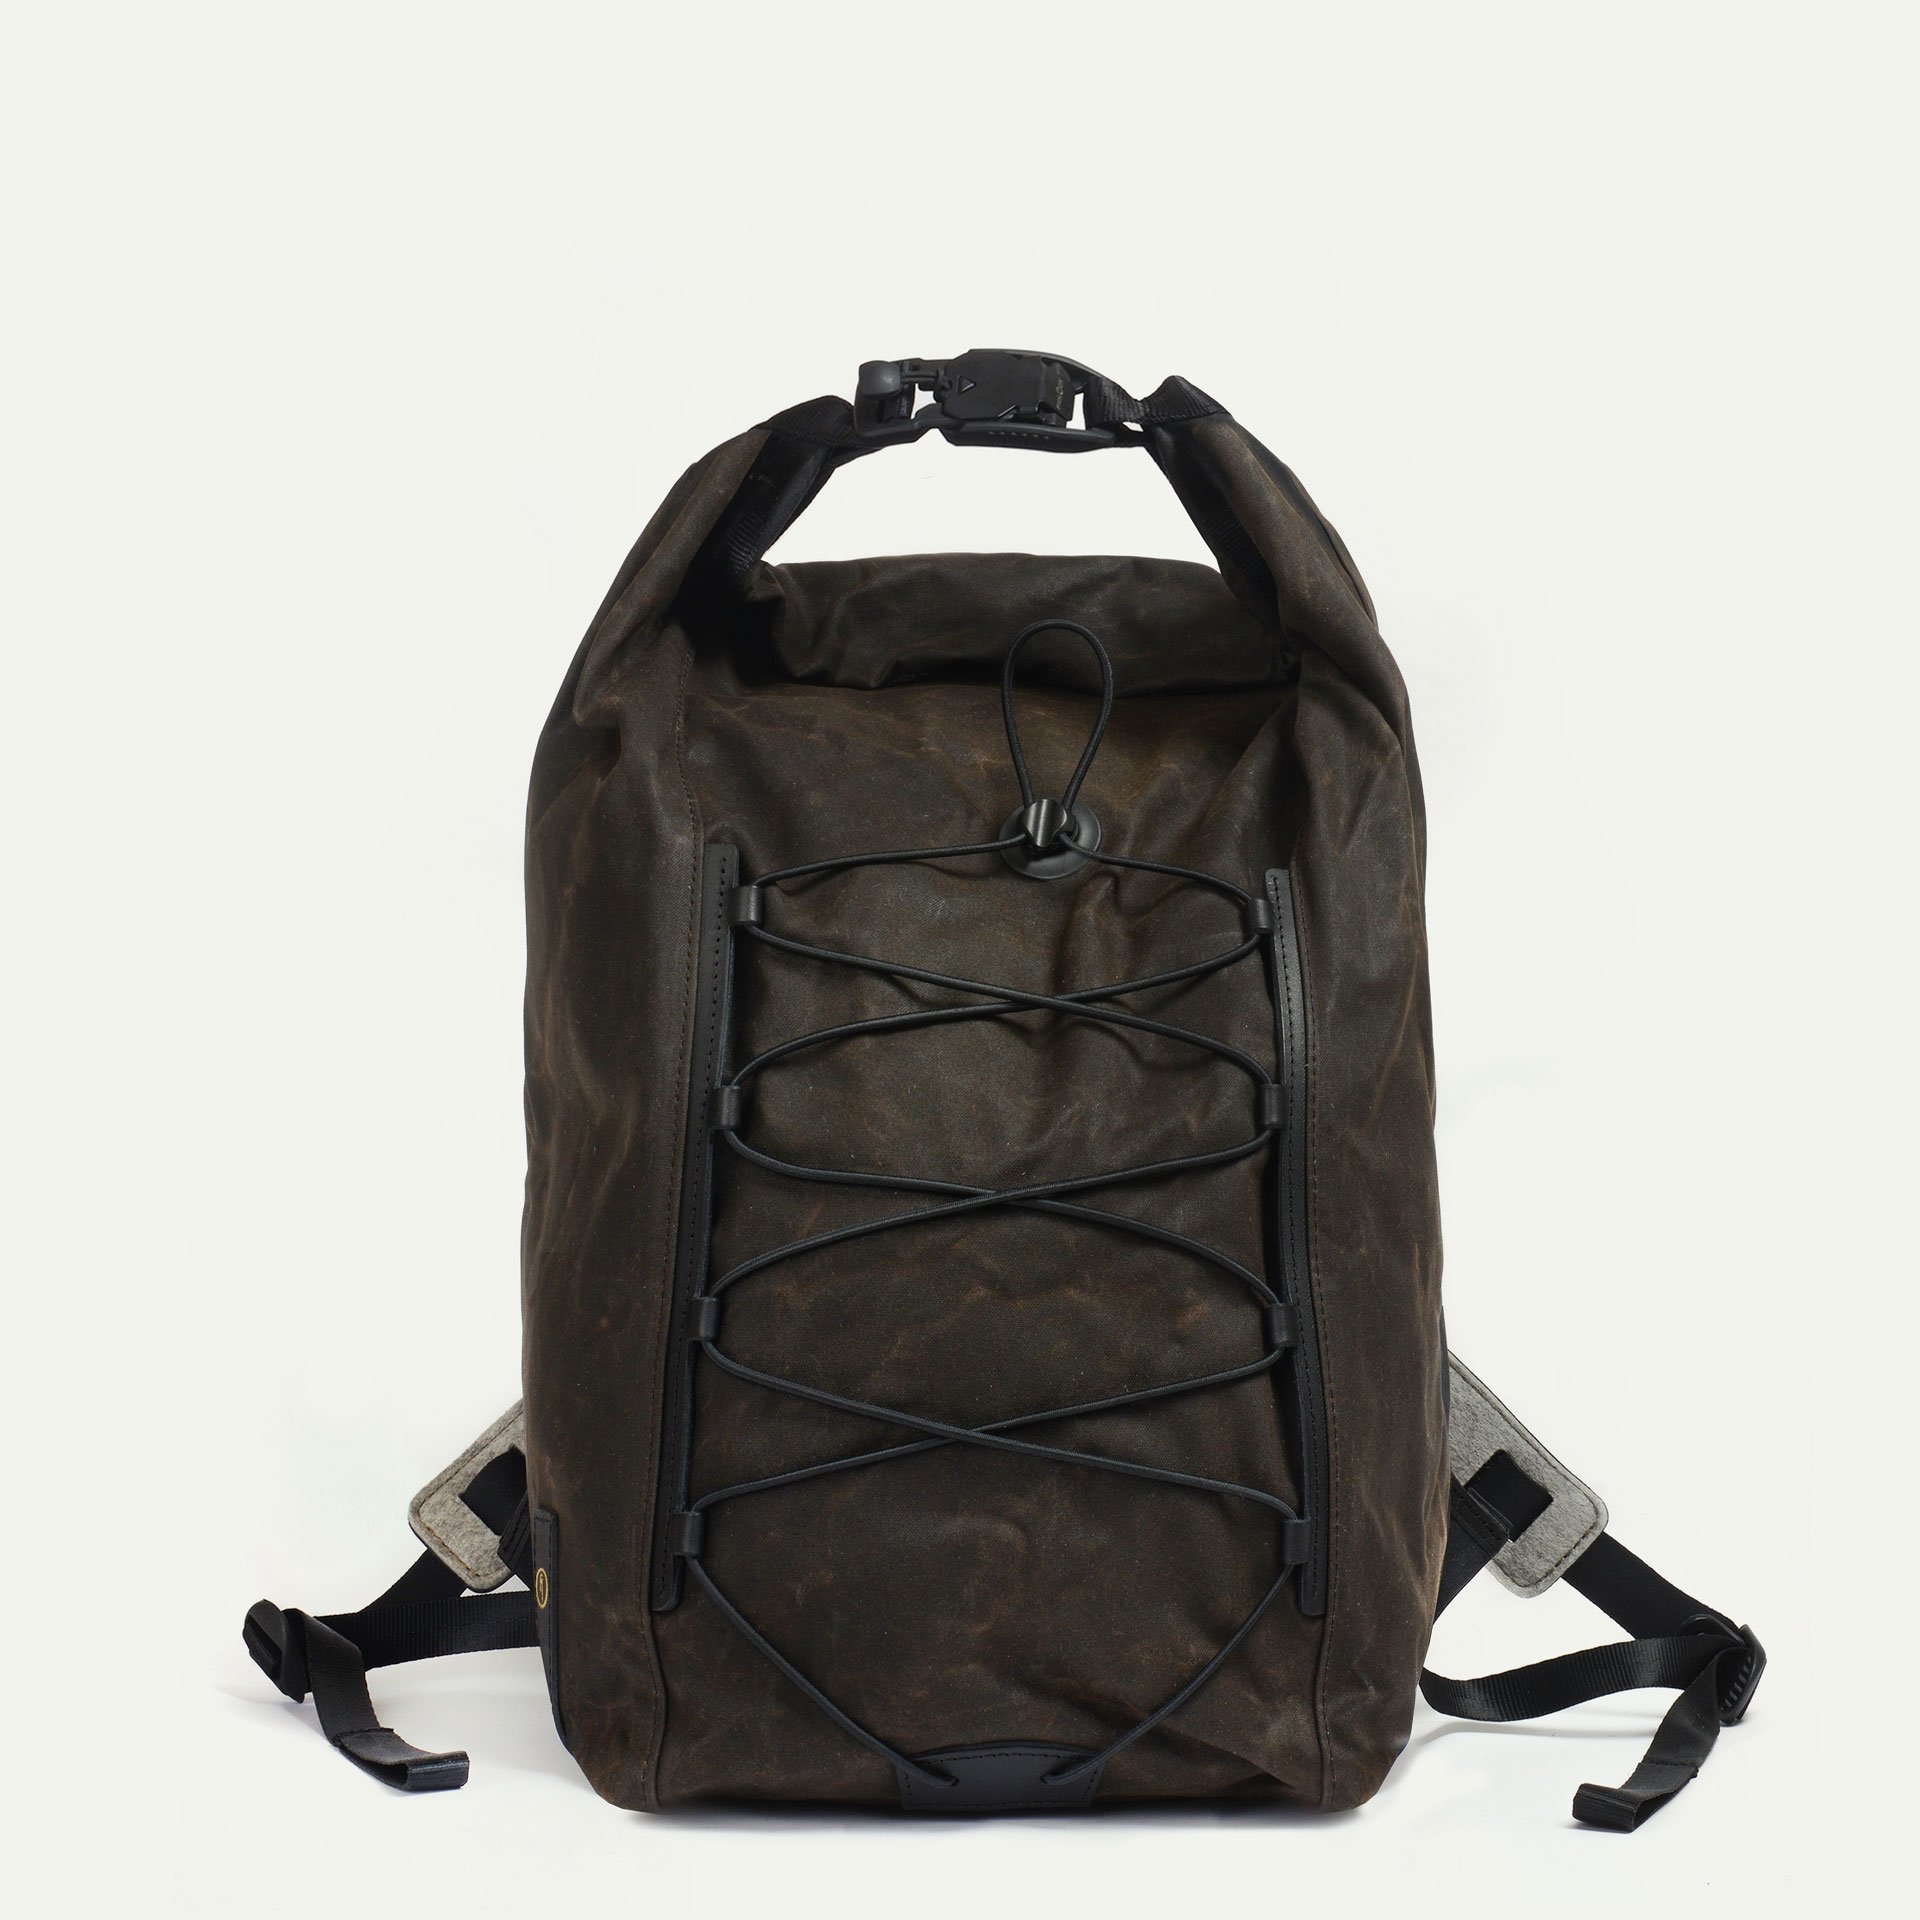 Météore backpack - Khaki waxed (image n°1)